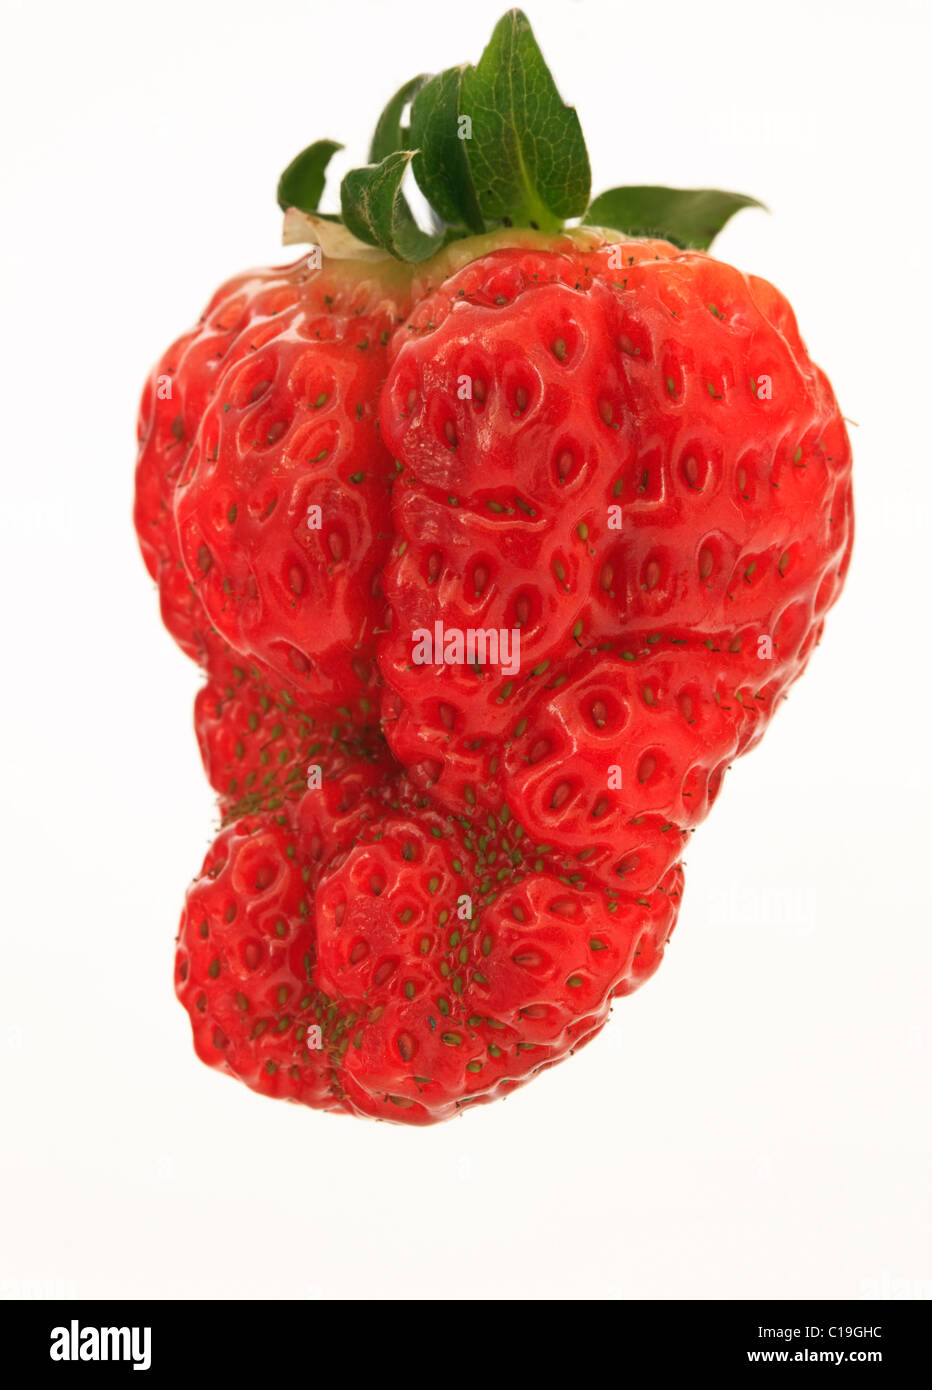 Studio still life. Close-up of one misshapen fresh Strawberry on a white background Stock Photo